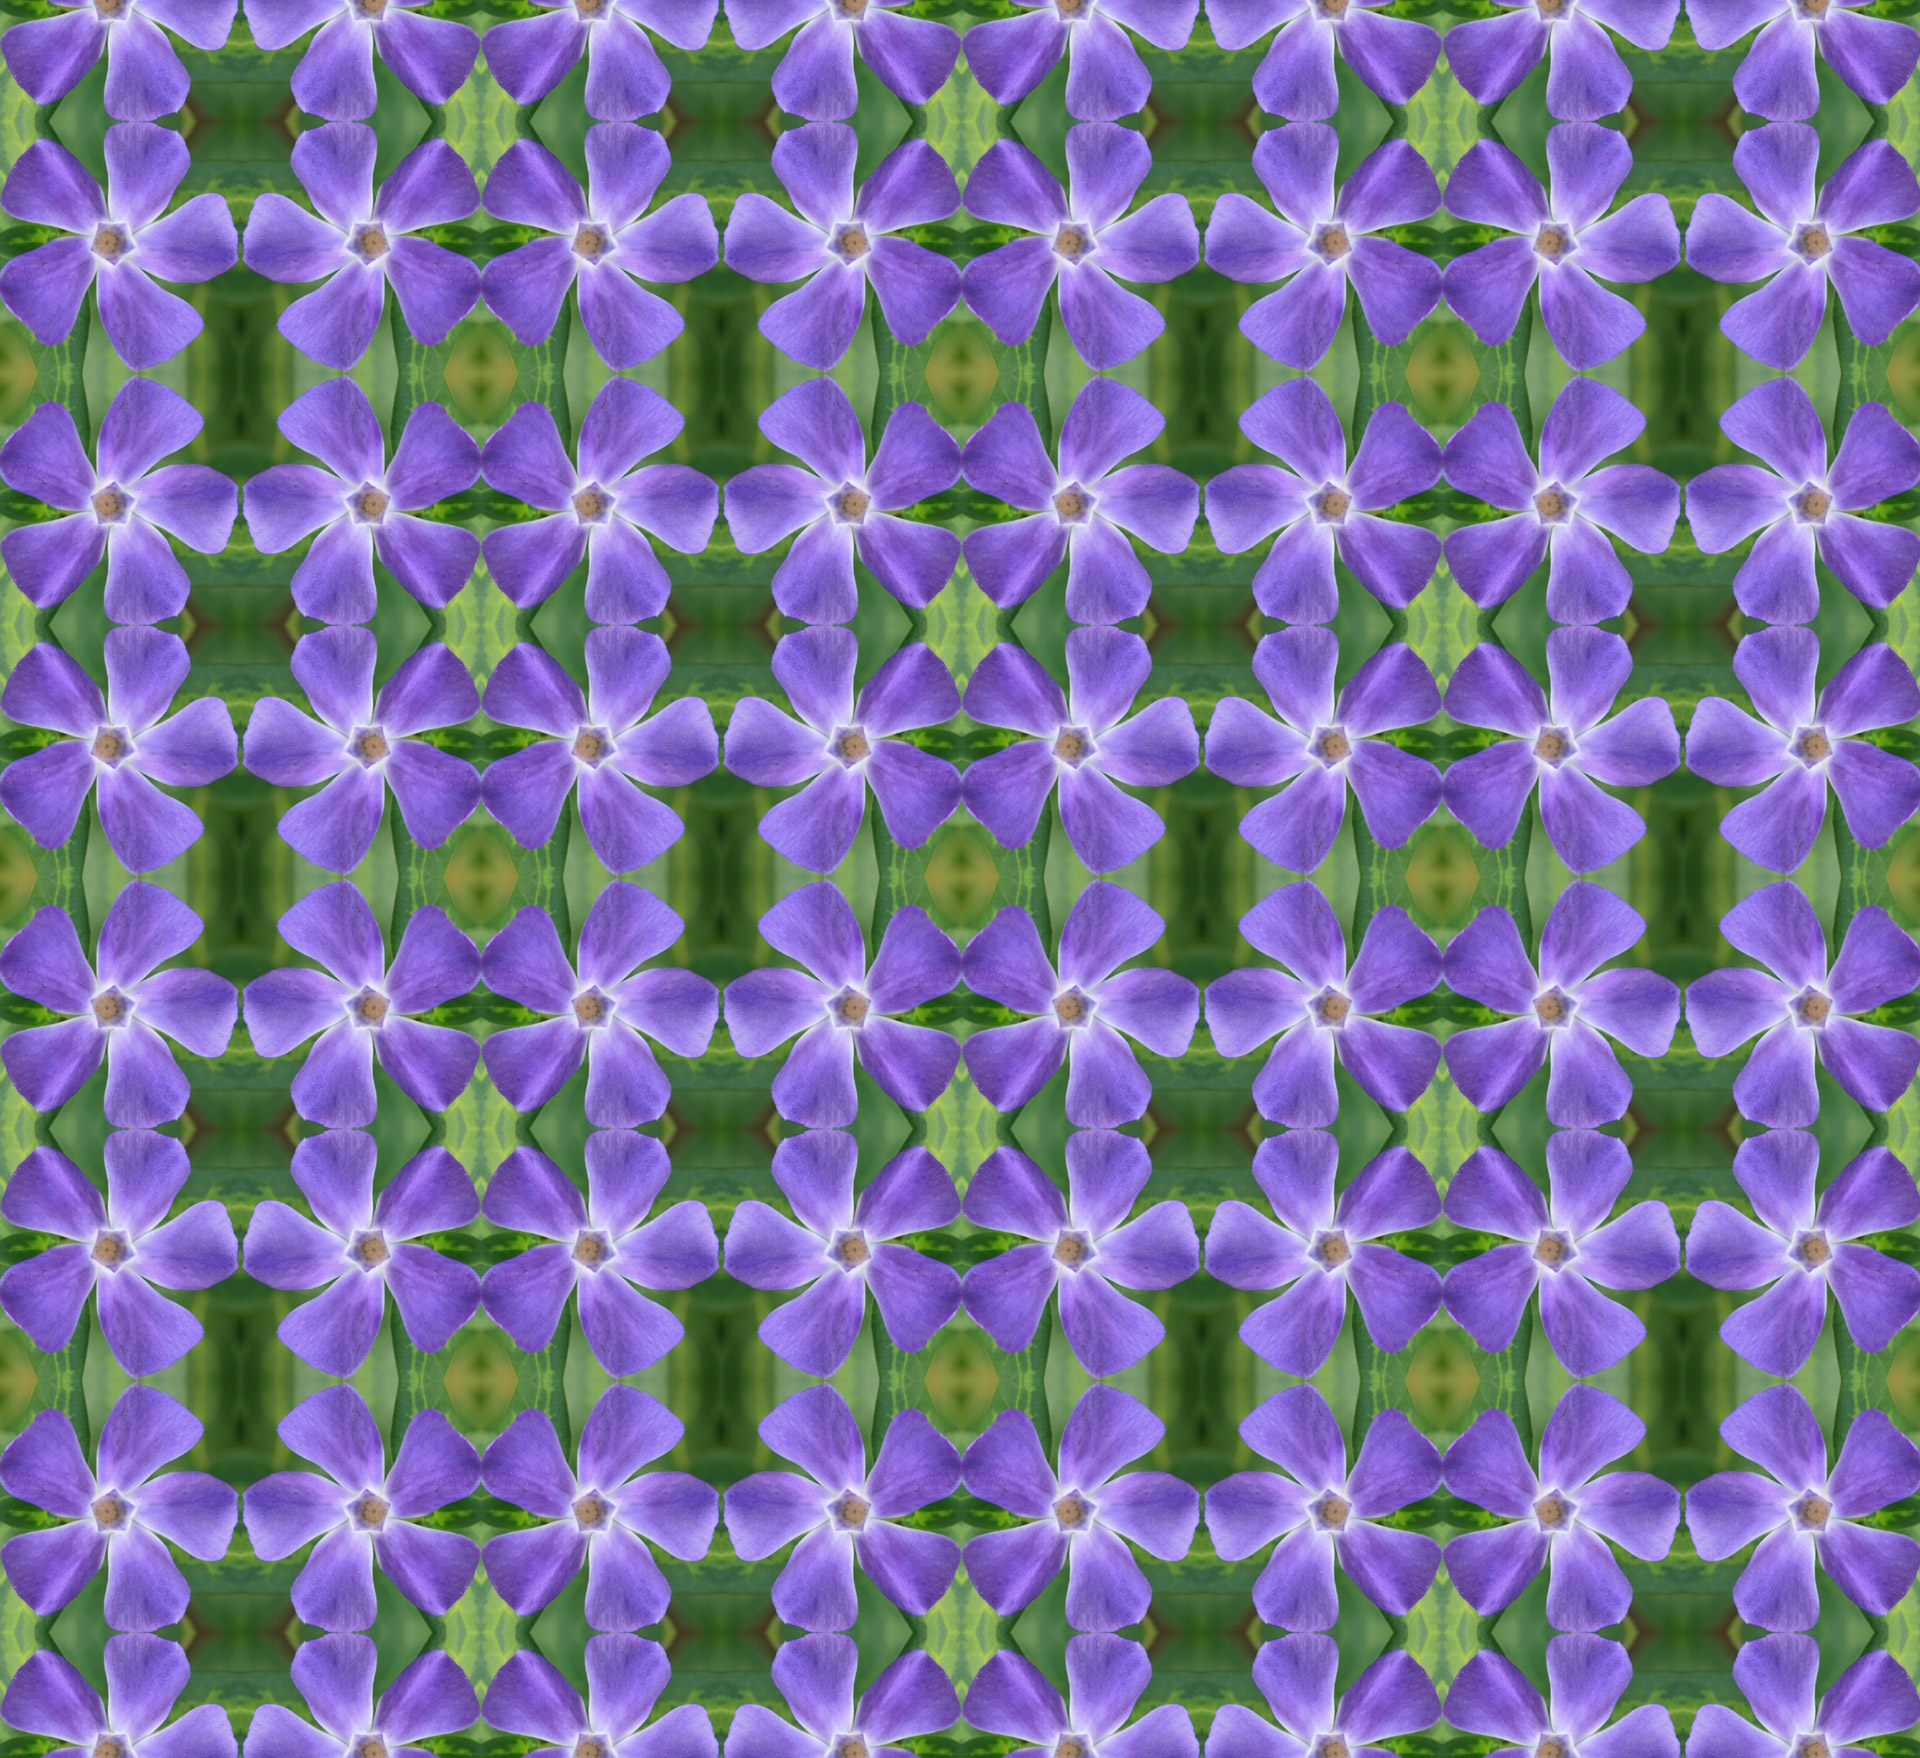 Lavender Block Pattern